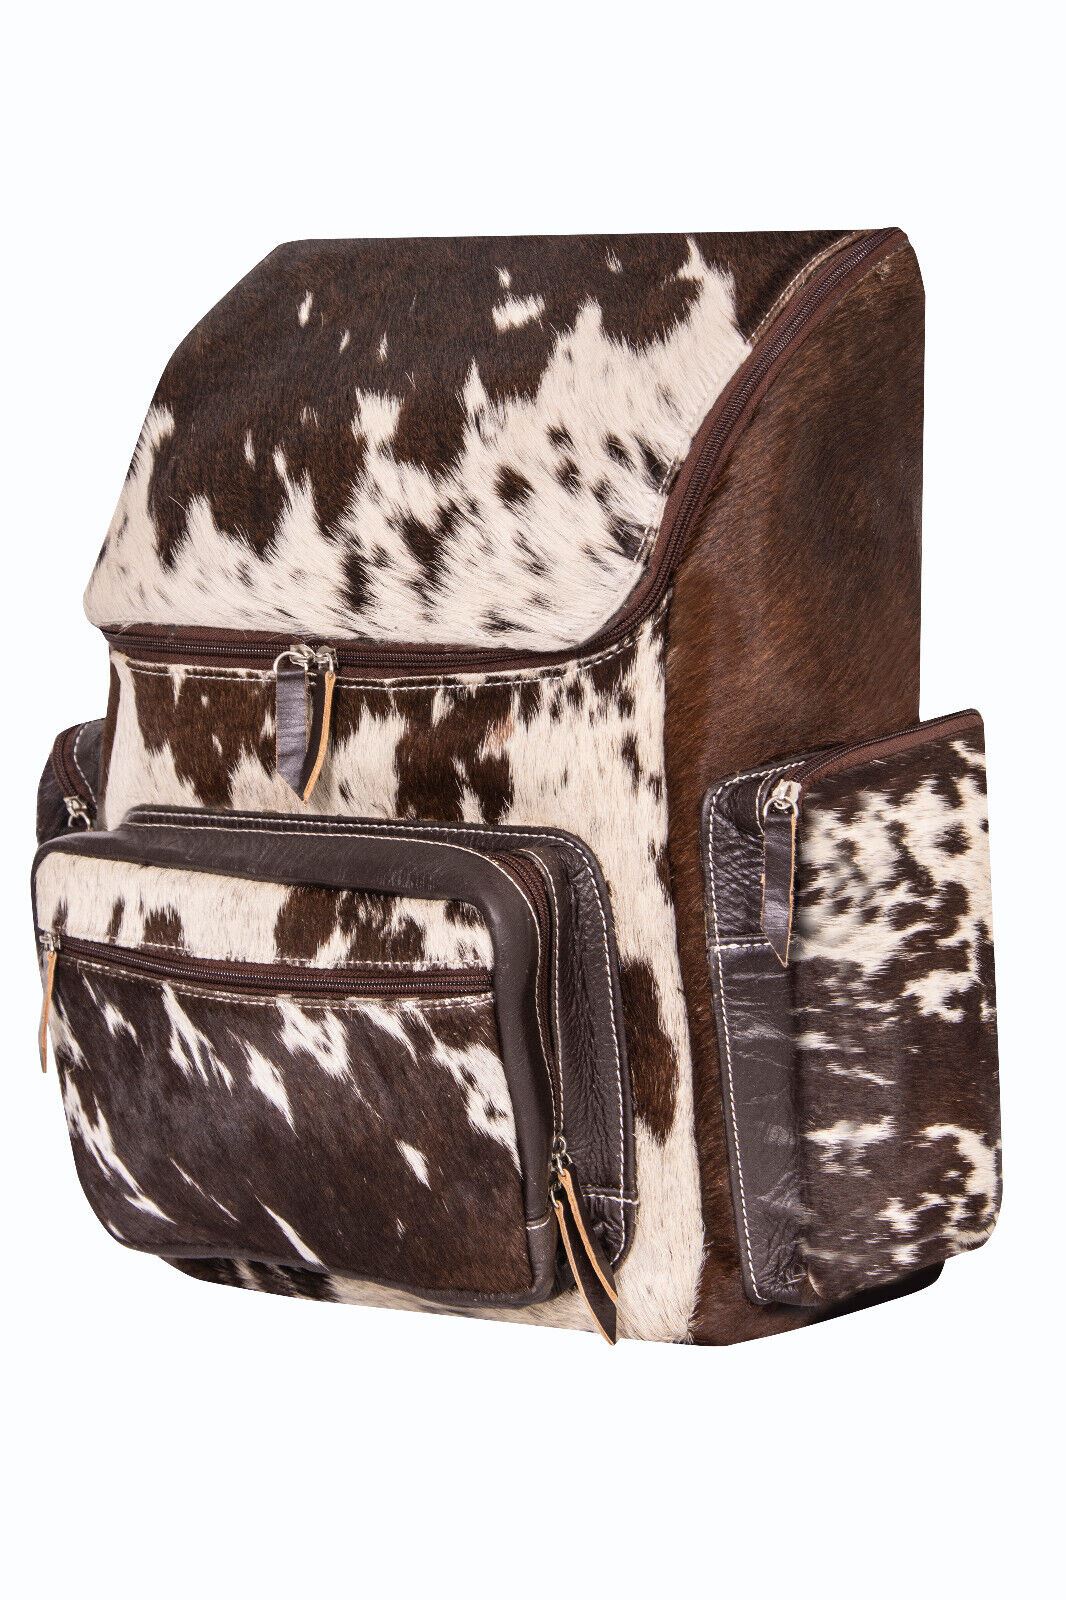 Deluxe Brown Leather Backpack Bag Genuine Cowhide &amp; Cow Fur Travel Rucksack